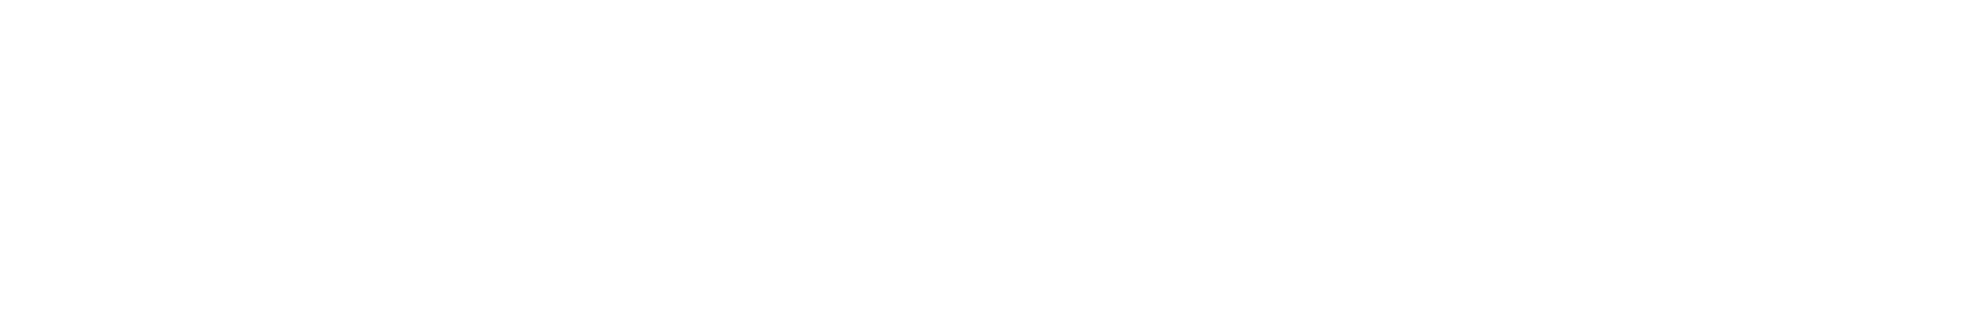 Brooks Public Policy Logo One Line White